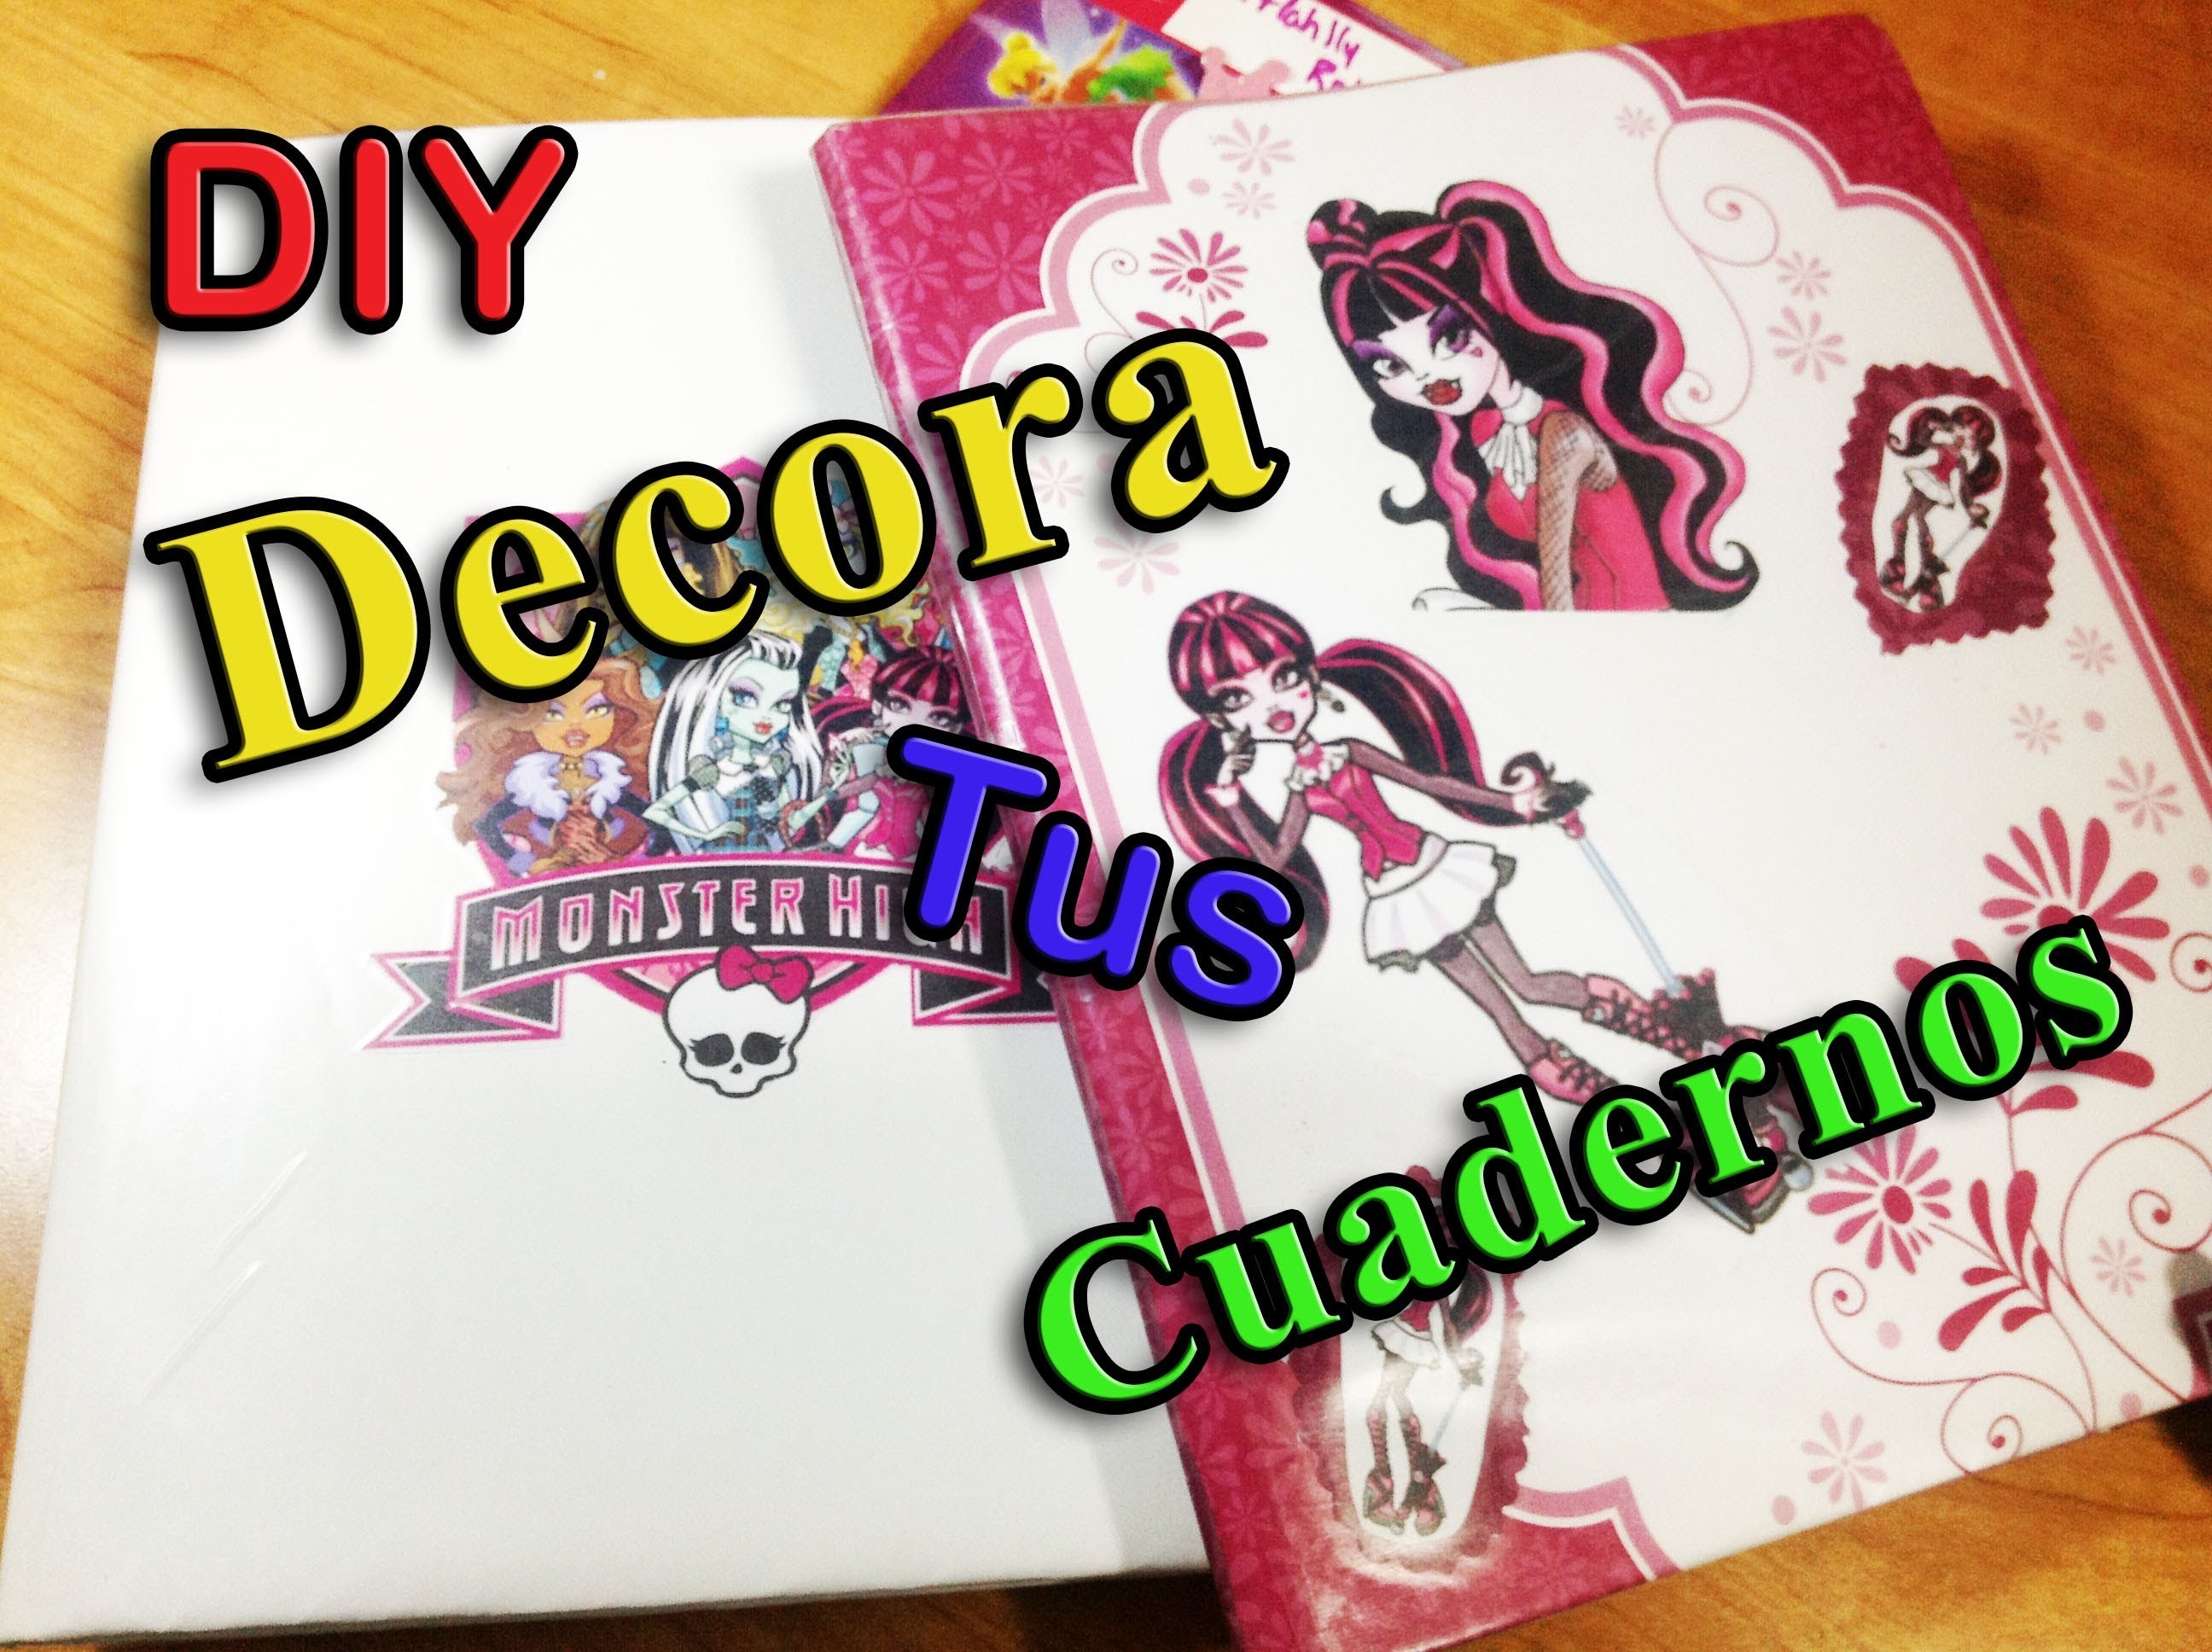 DIY - Decora tus Cuadernos - Decorate your Notebooks - Back to School